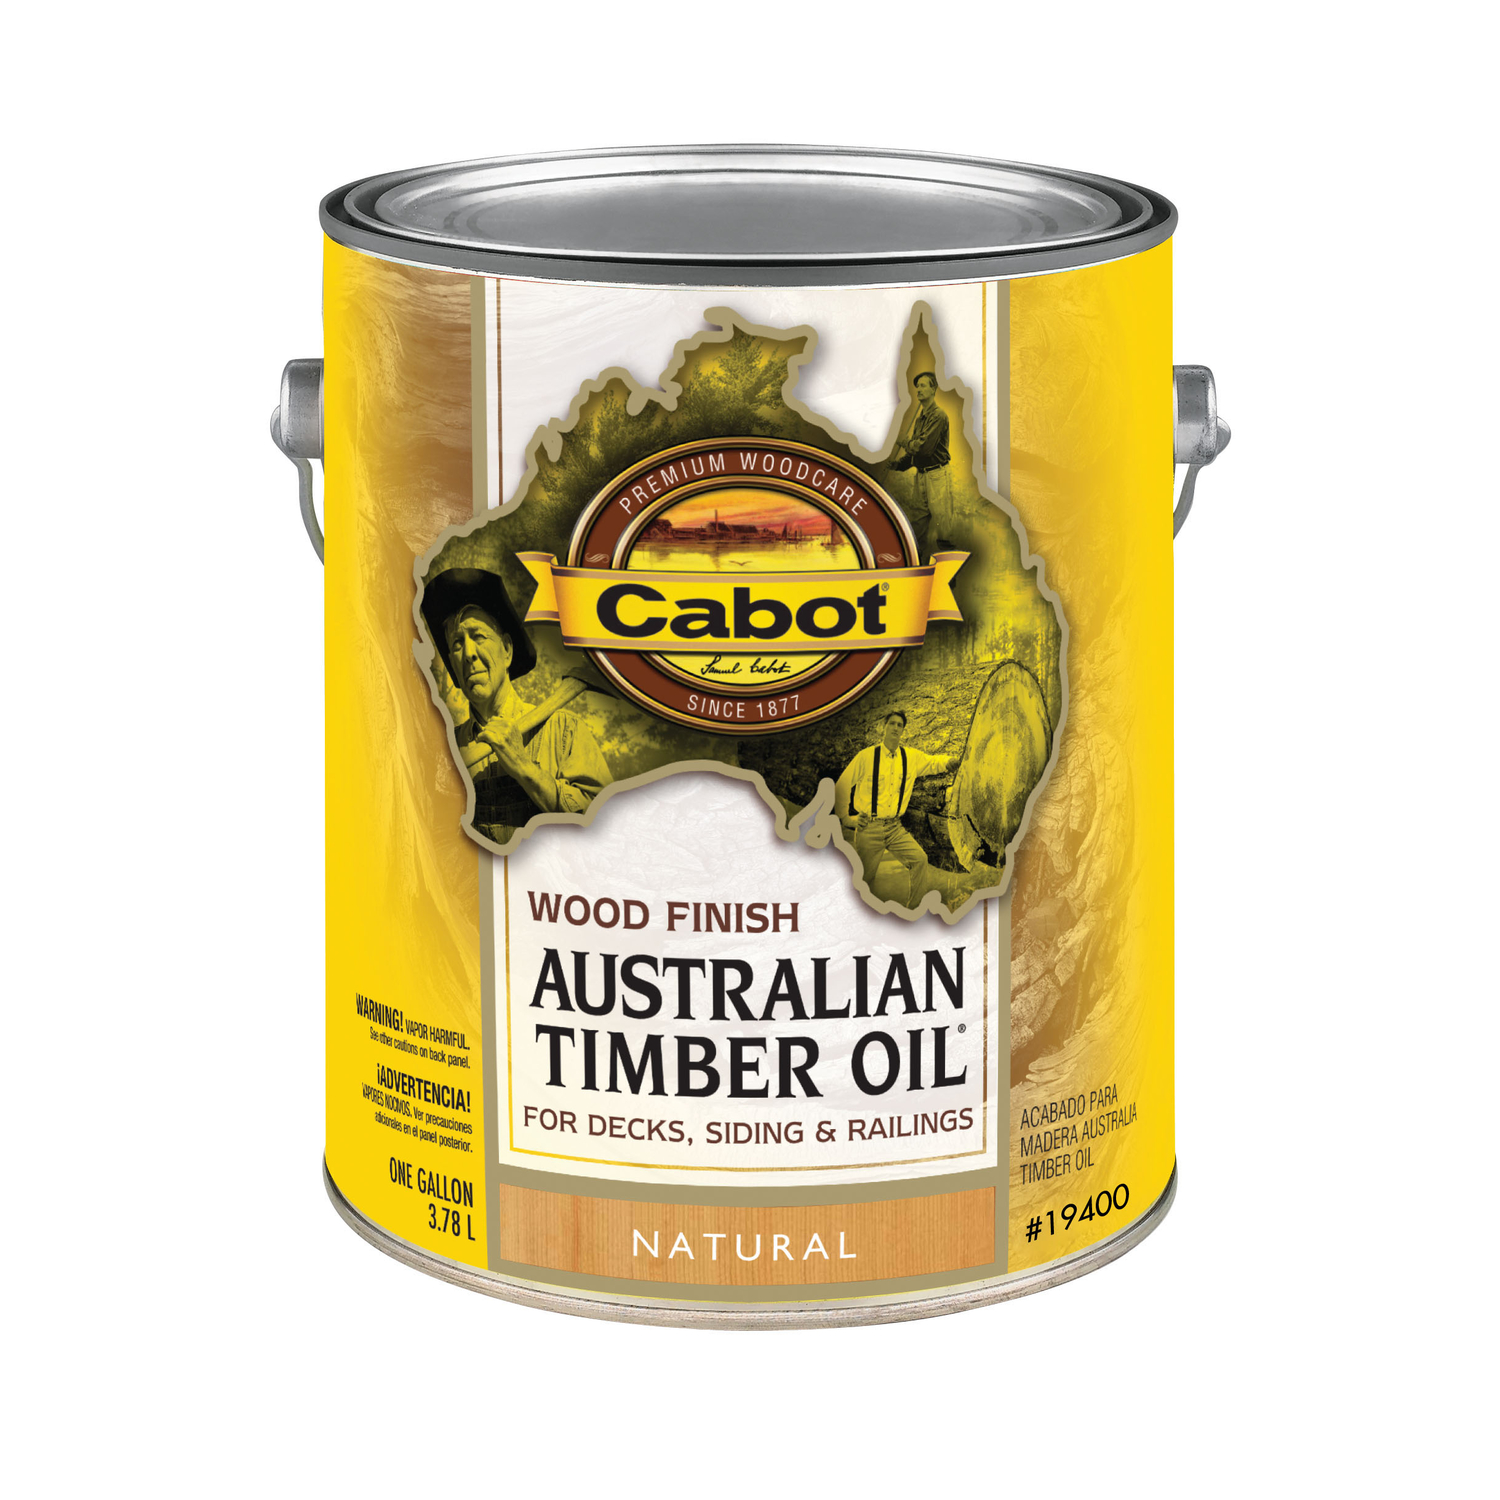 Cabot Australian Timber Oil Low VOC Transparent Natural Oil-Based Australian Timber Oil 1 gal